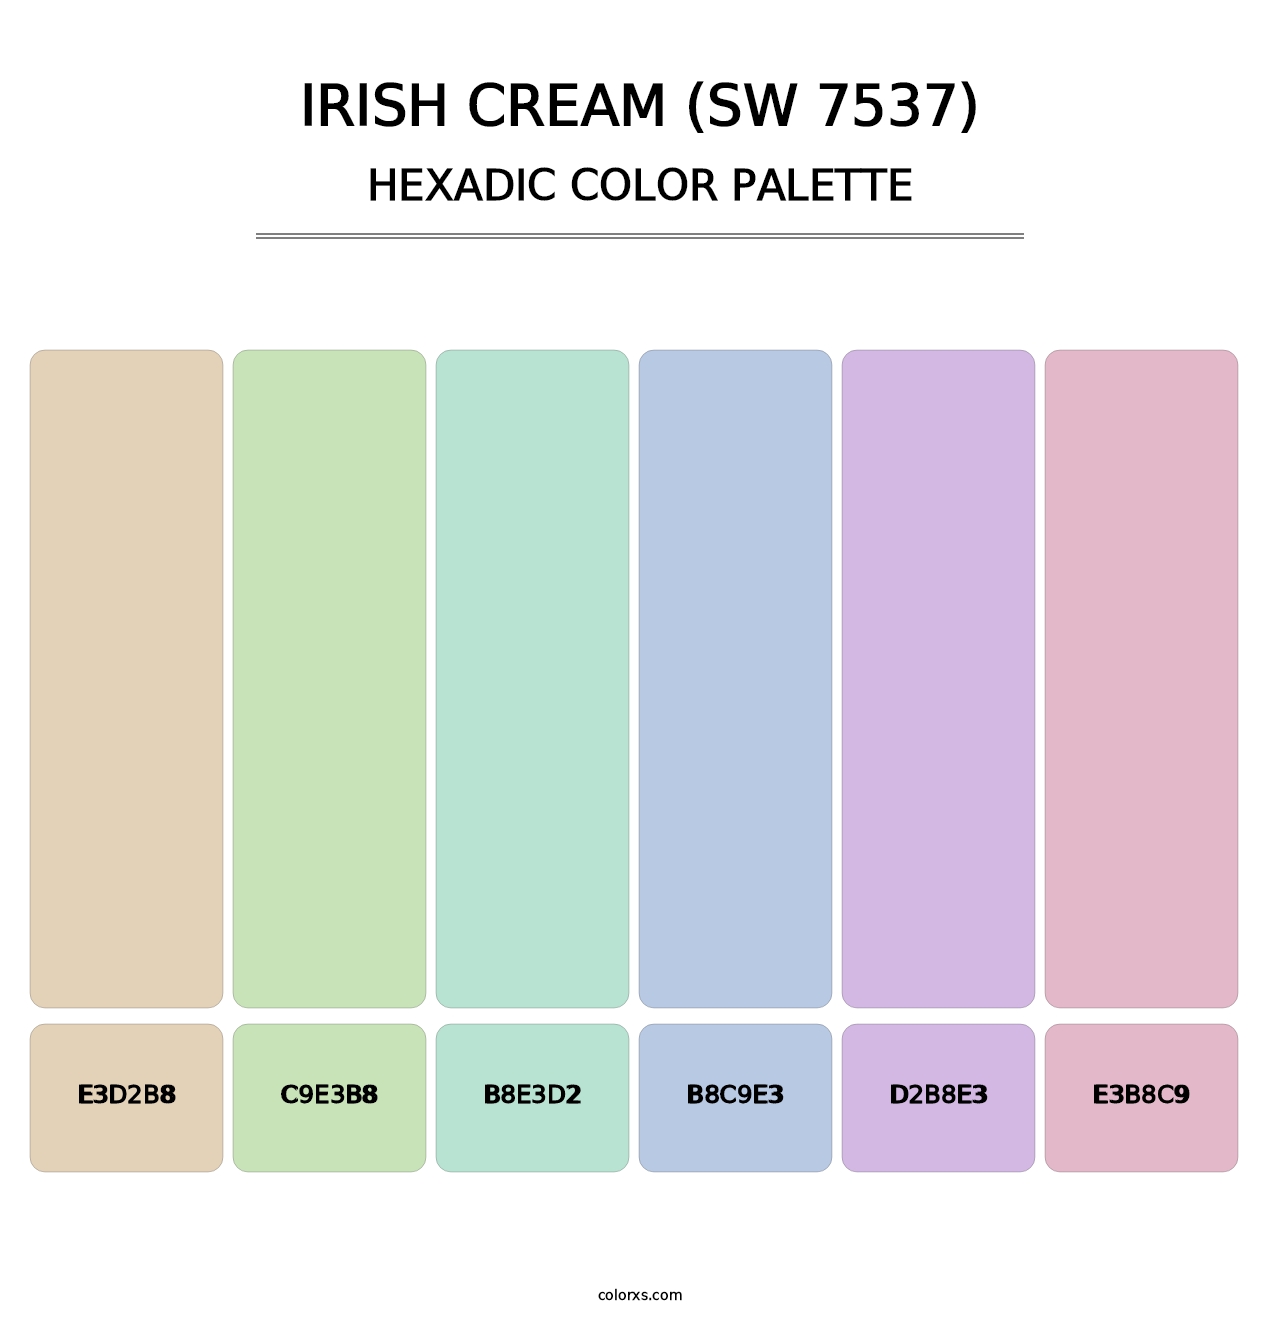 Irish Cream (SW 7537) - Hexadic Color Palette